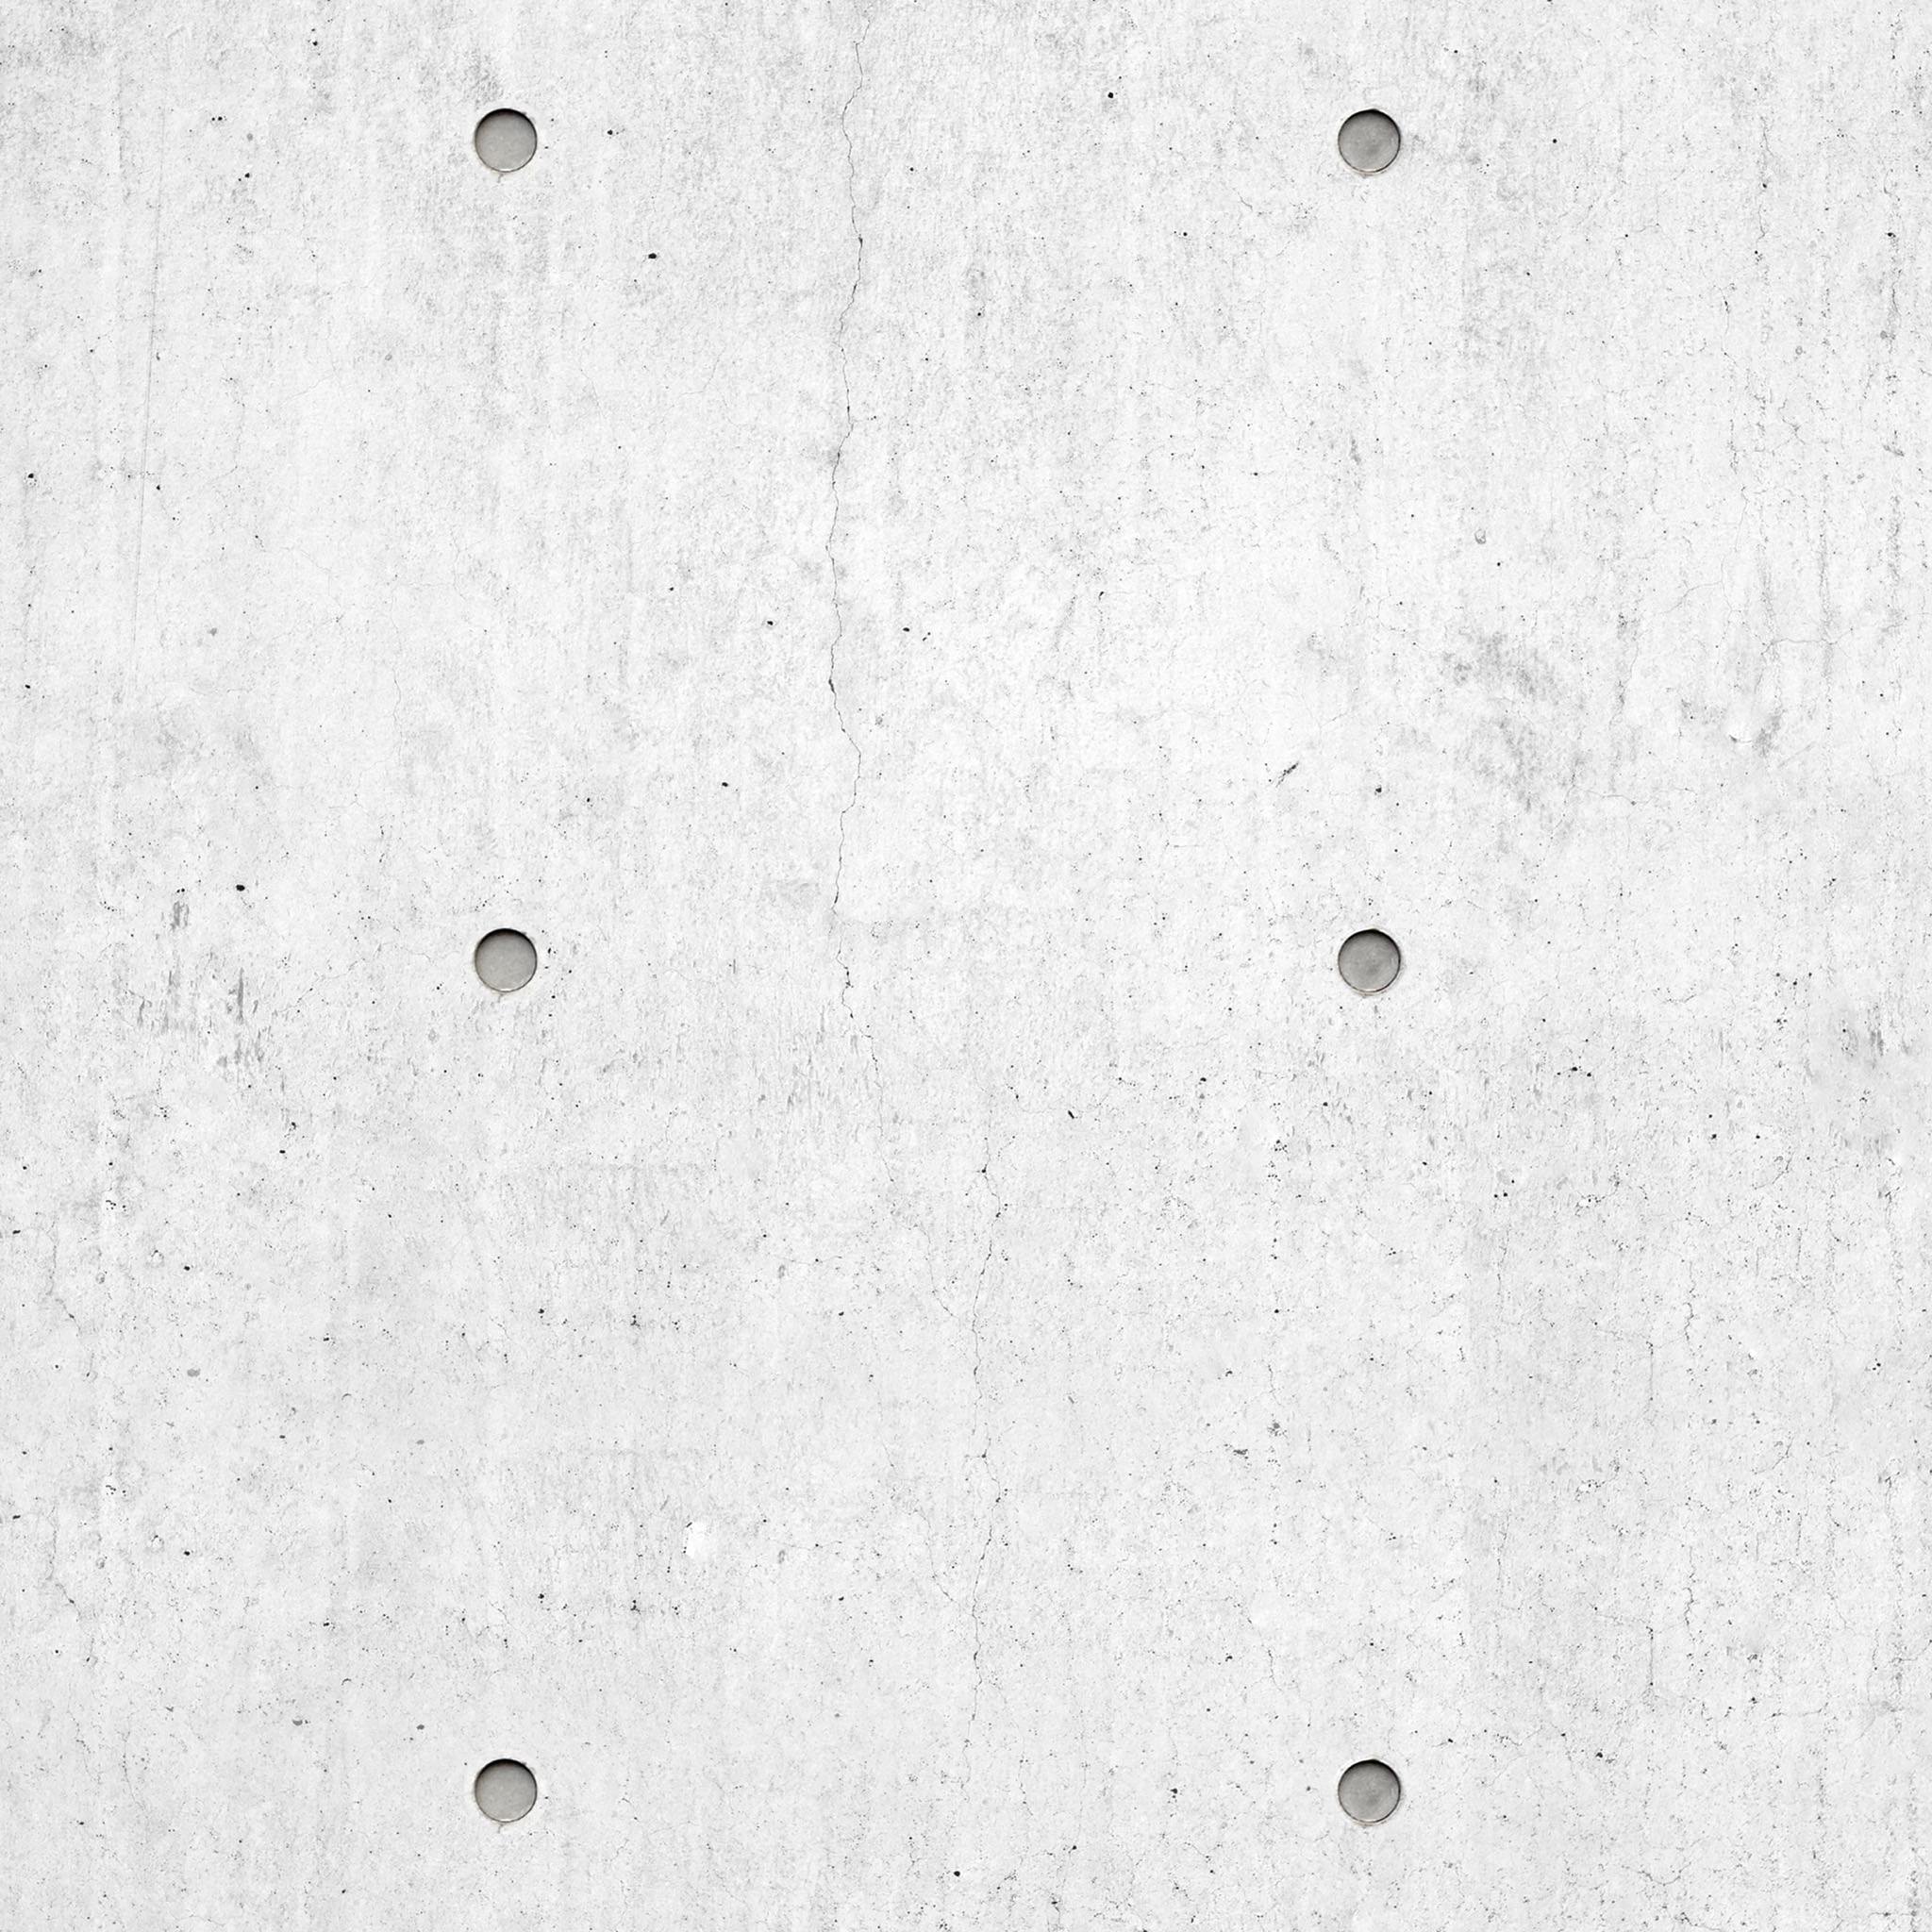 White concrete. Текстура бетона. Полированный бетон текстура. Текстура бетона бесшовная. Ячеистый бетон текстура.